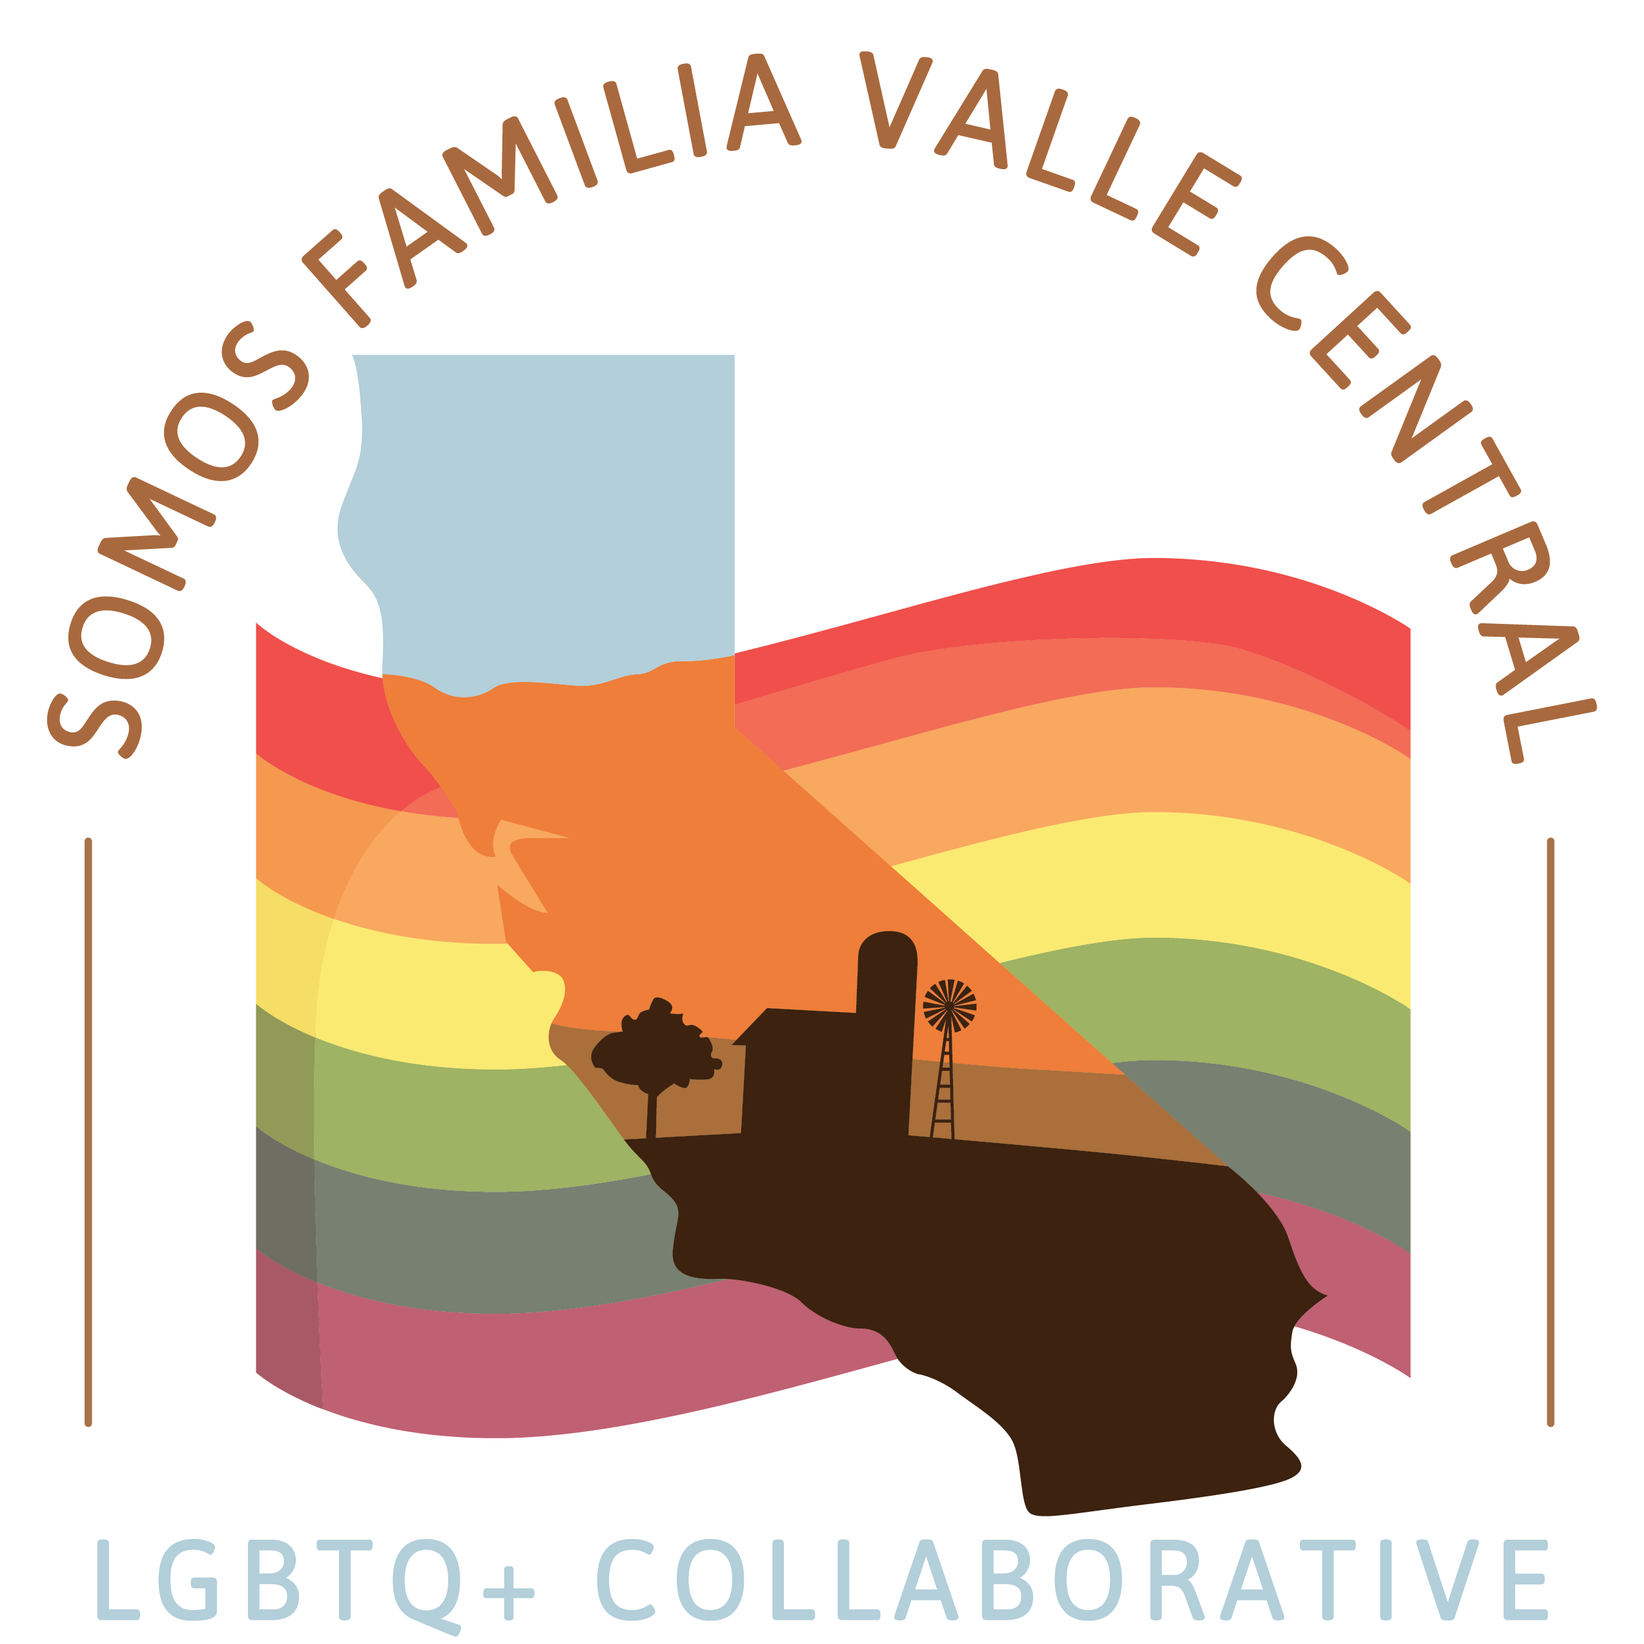 Somos Familia Valle Central LGBTQ